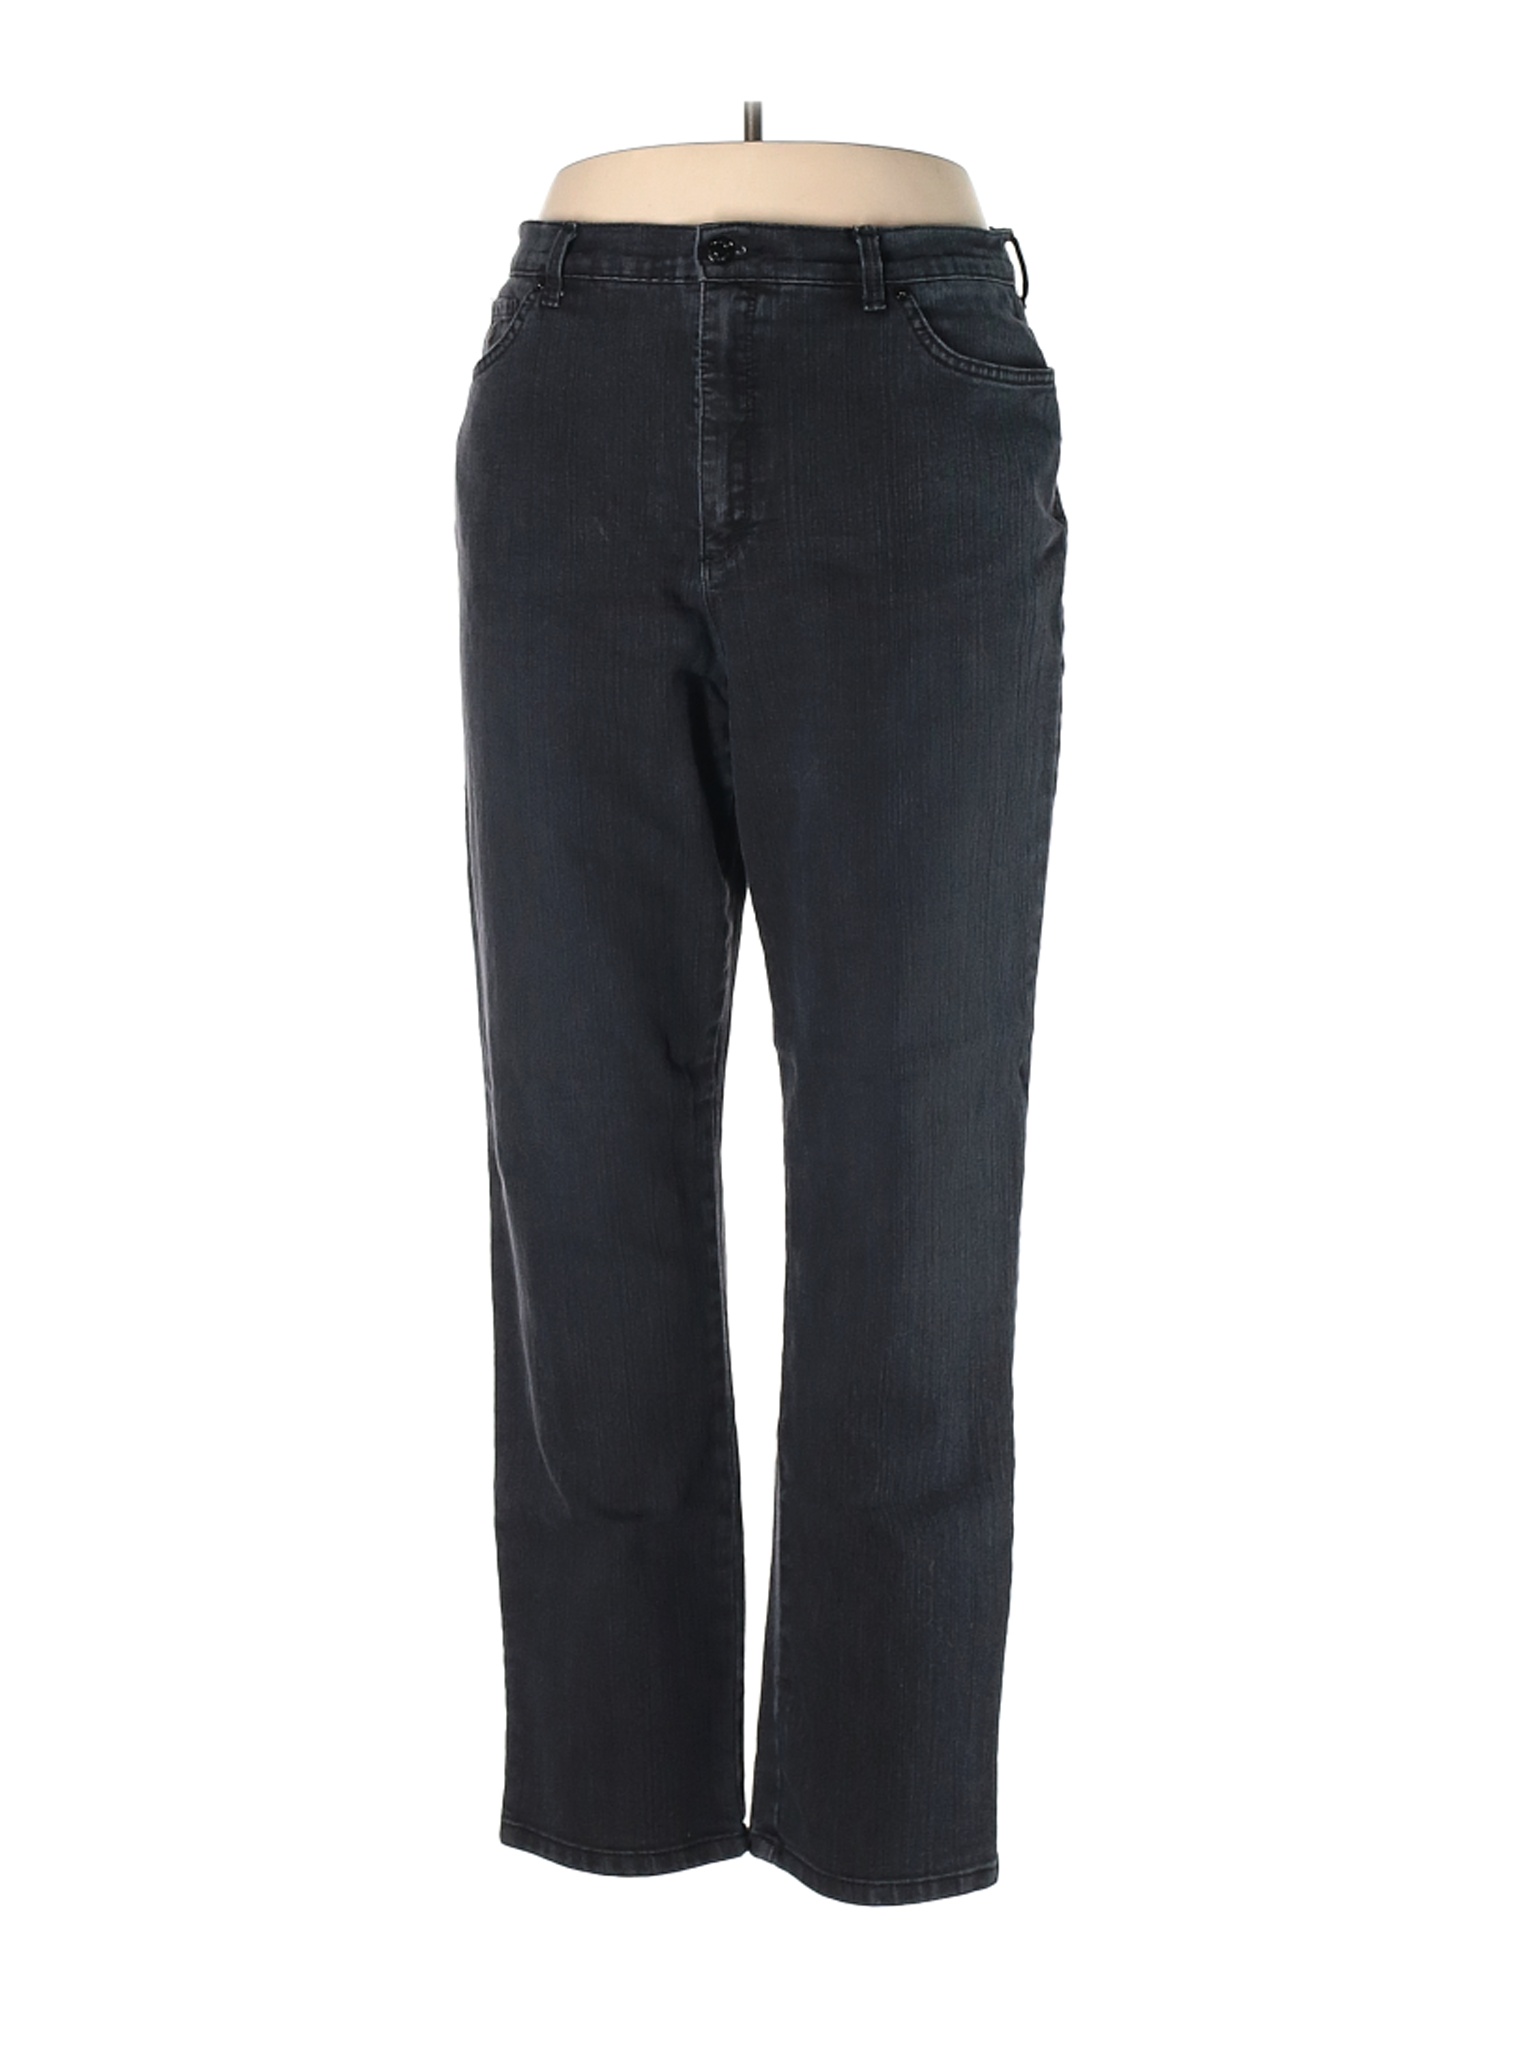 Gloria Vanderbilt Women Black Jeans 16 | eBay